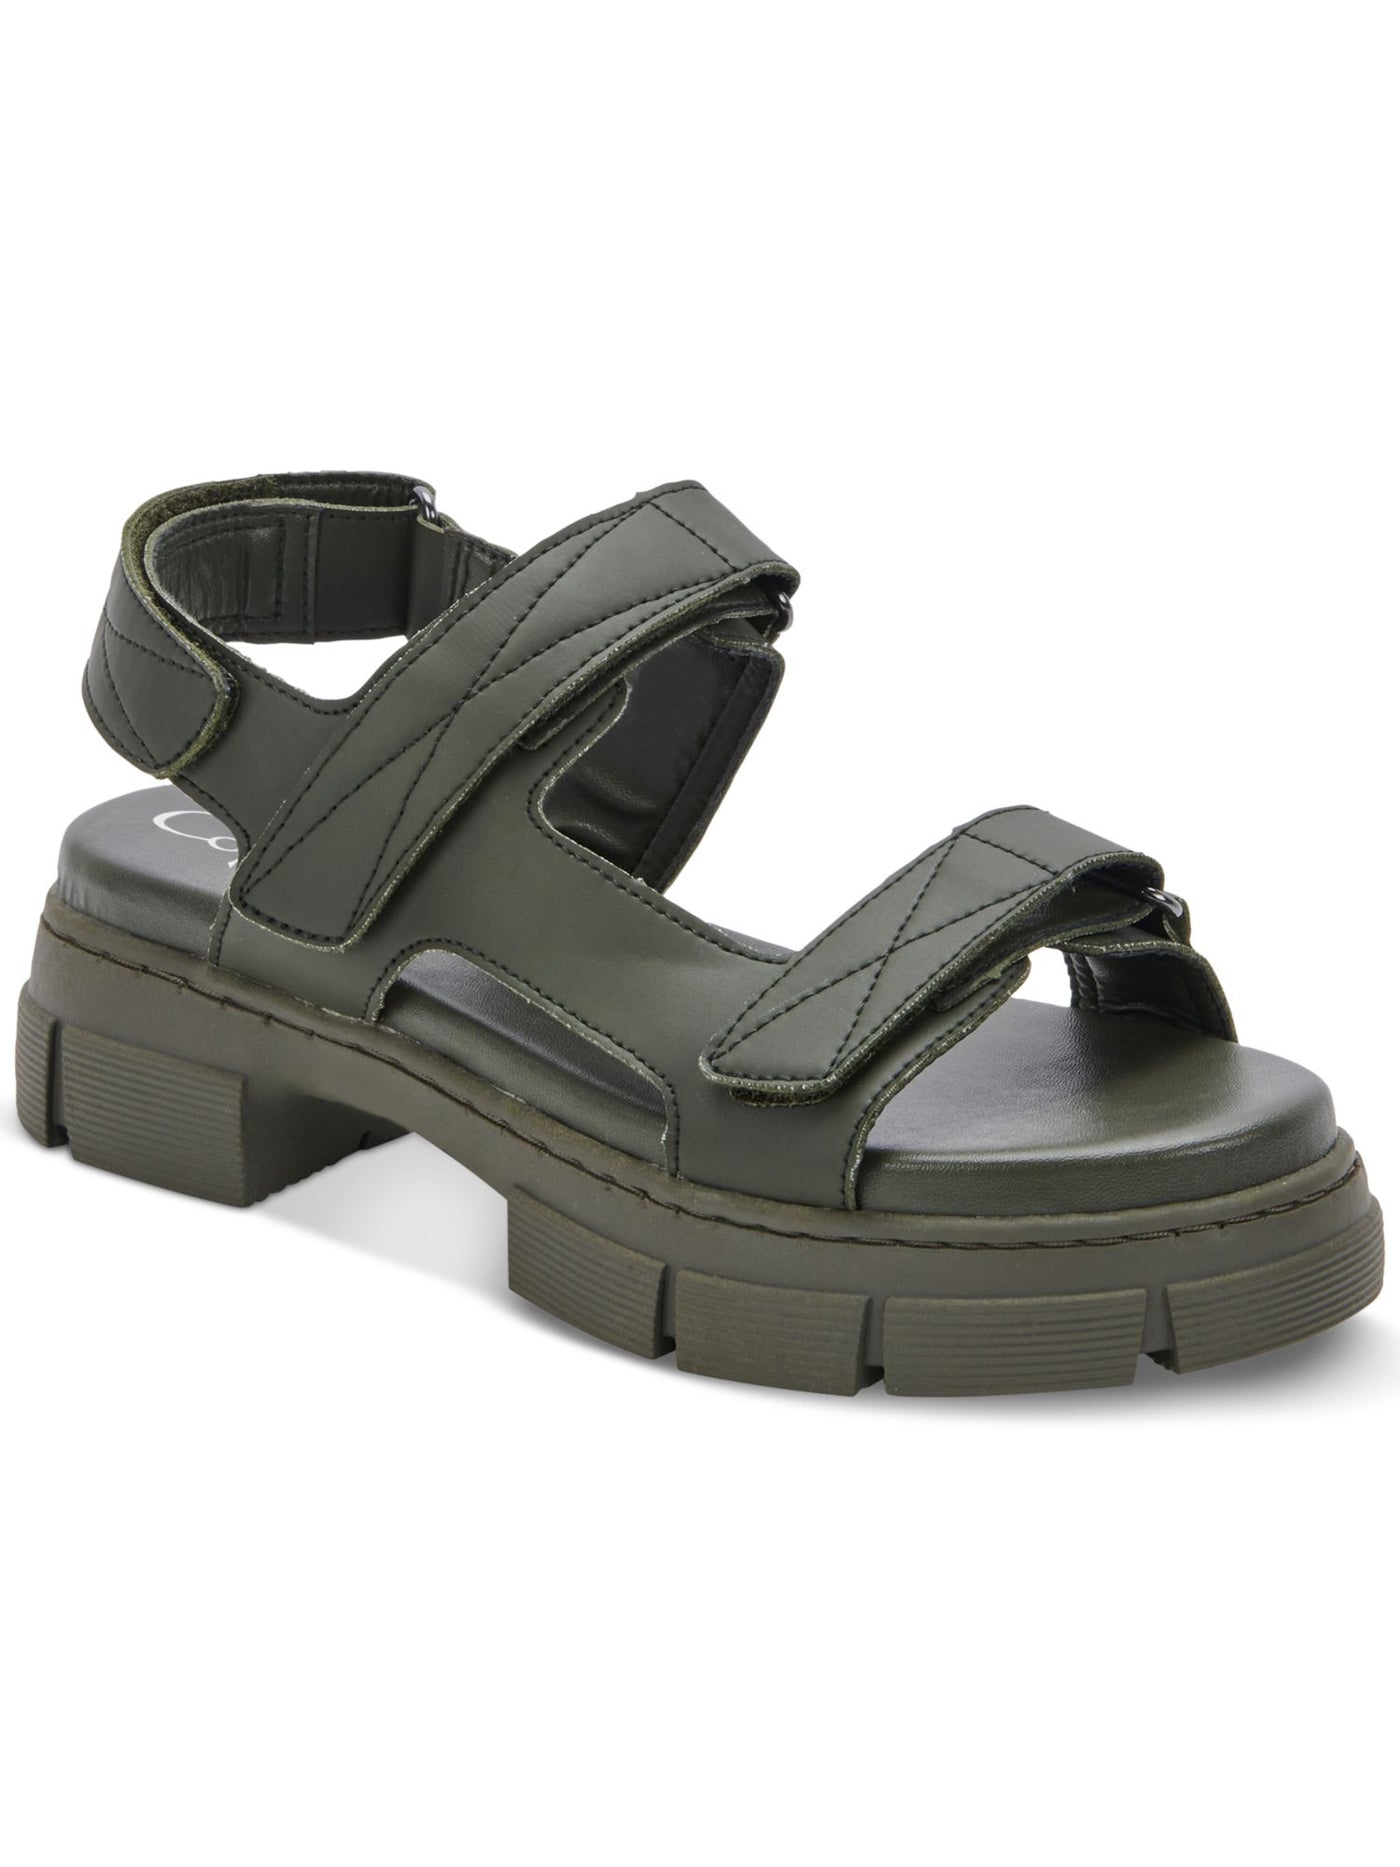 AQUA COLLEGE Womens Green Adjustable Waterproof Hux Round Toe Platform Slingback Sandal 7 M